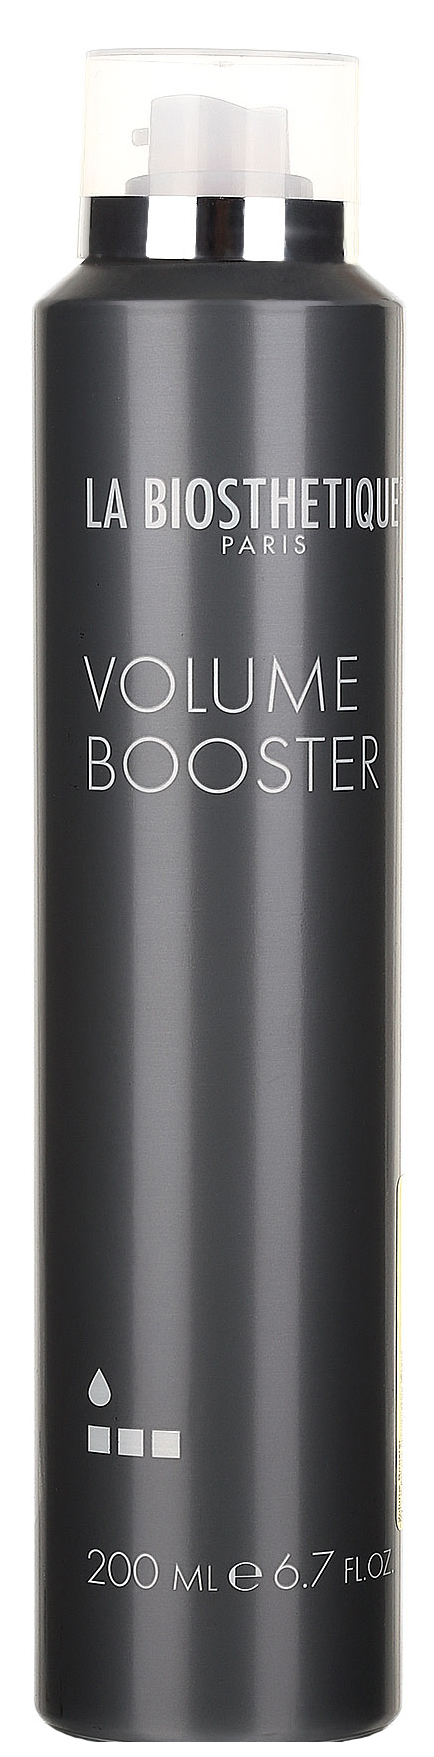 Мусс для волос La Biosthetique Base Volume Booster 200 мл lakme мусс для укладки волос для прикорневого объема thick and volume